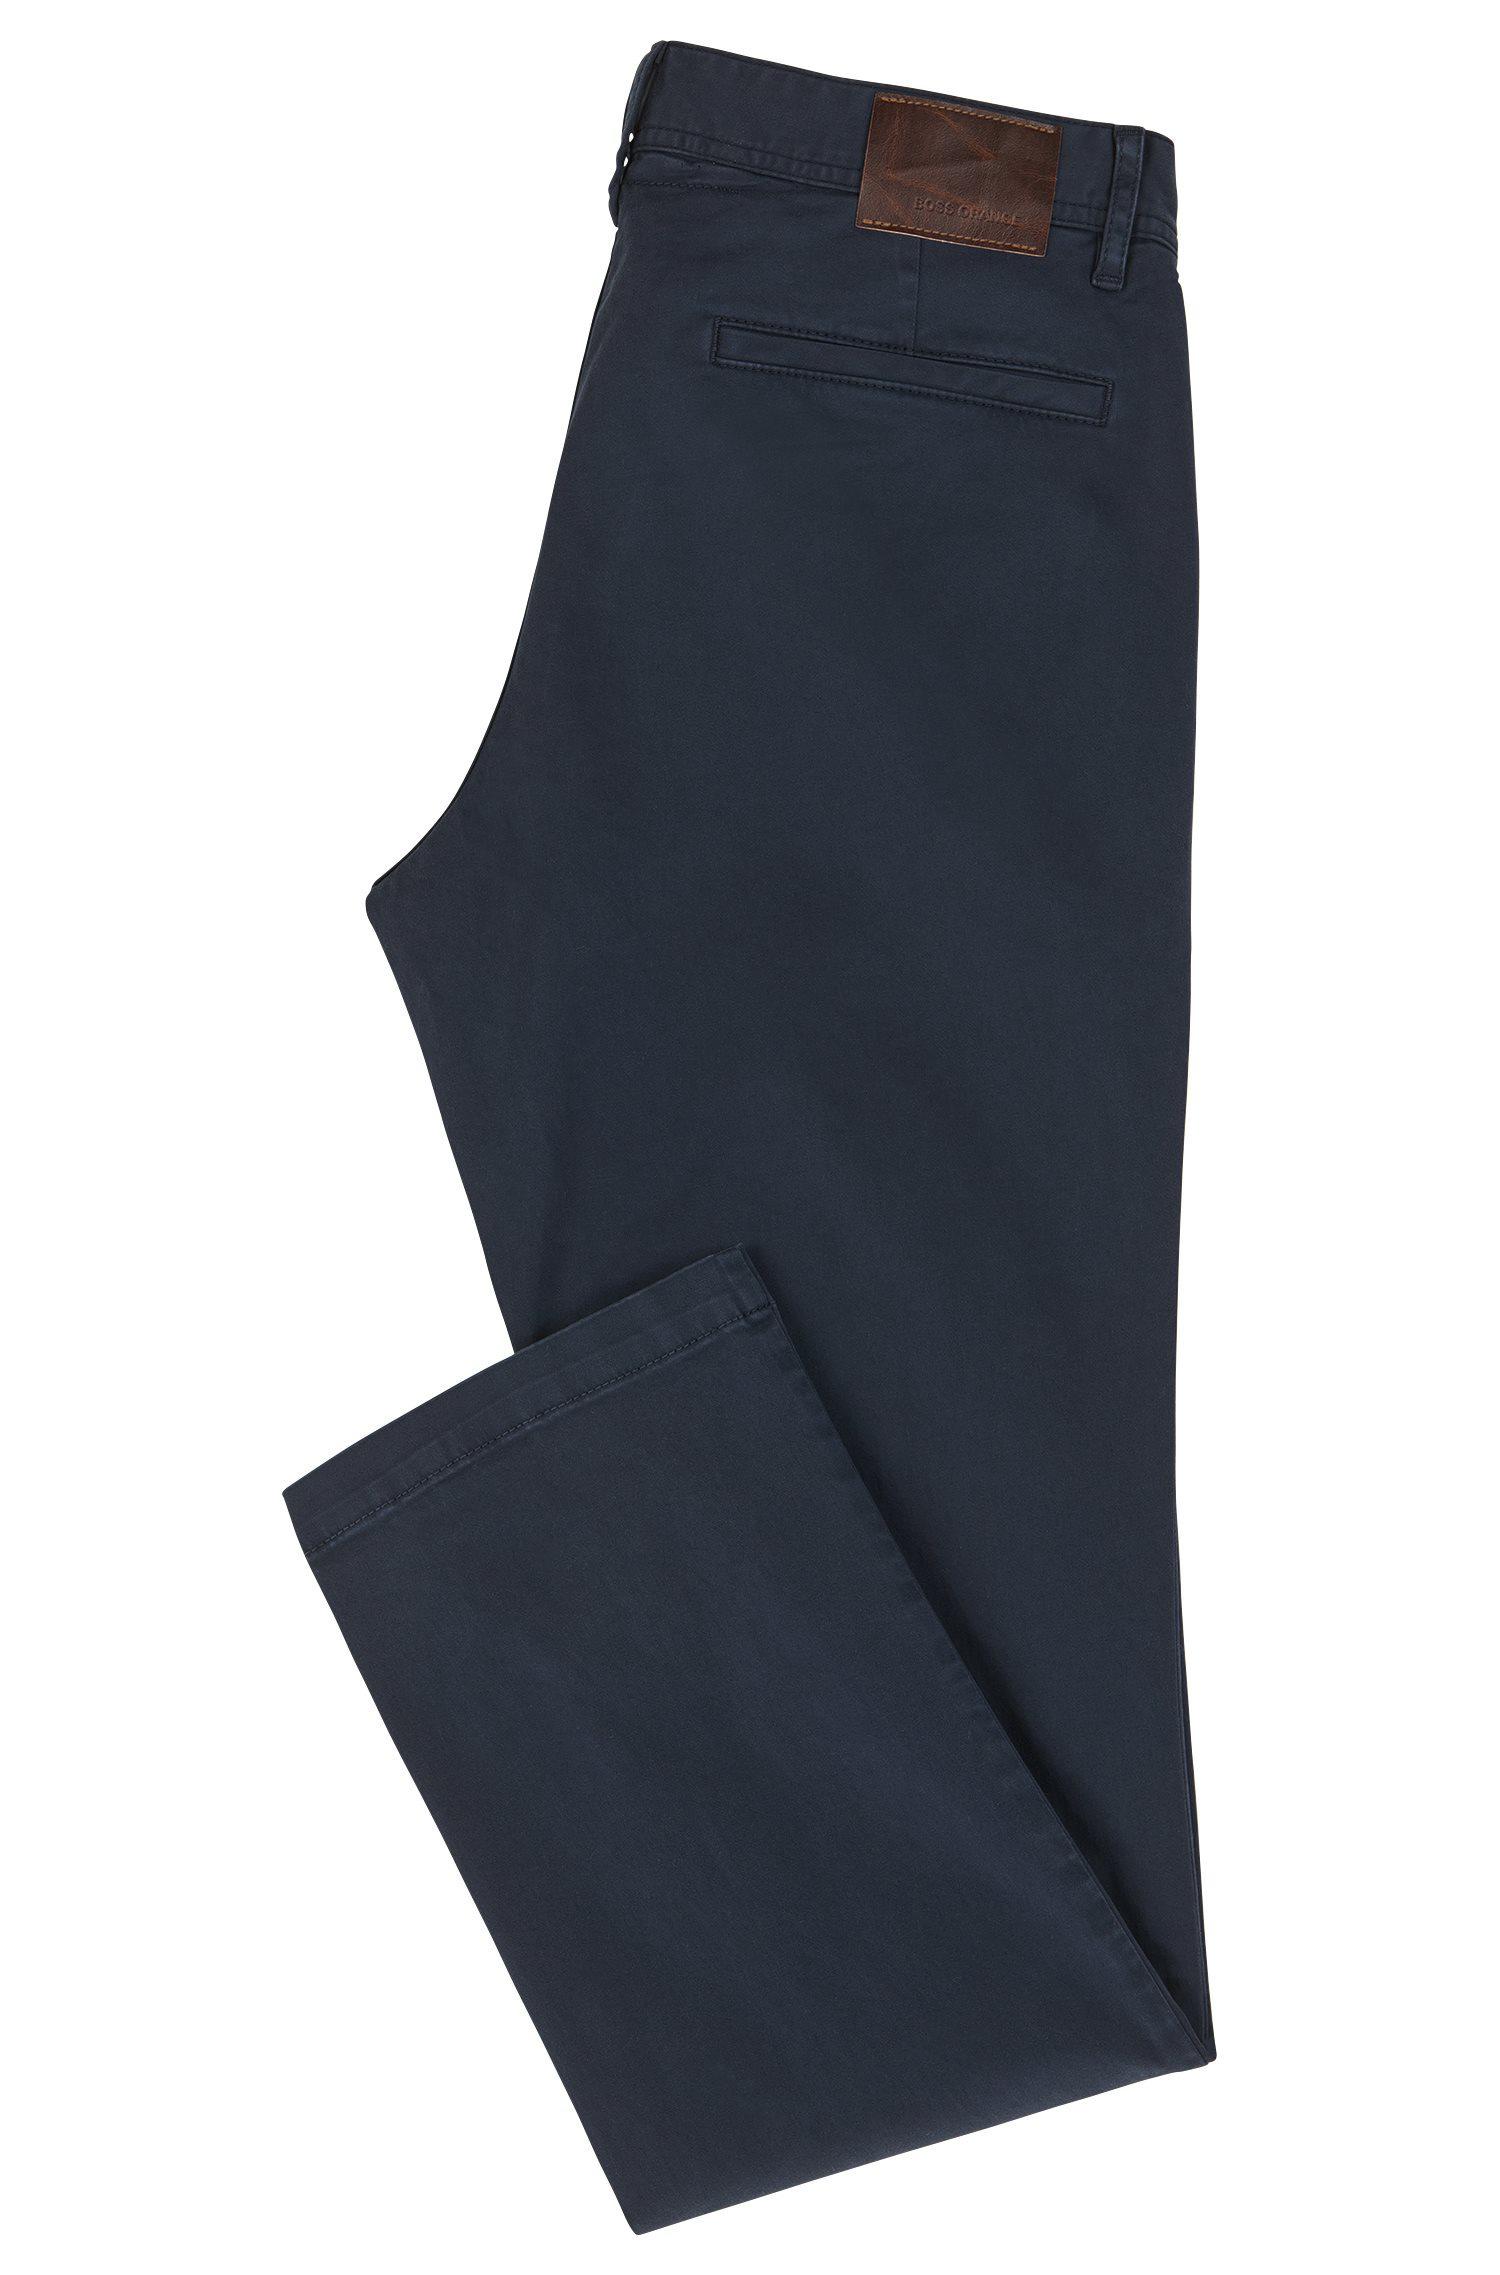 BOSS by HUGO BOSS 'schino Regular D' | Regular Fit, Stretch Cotton Chinos  in Dark Blue (Blue) for Men - Lyst